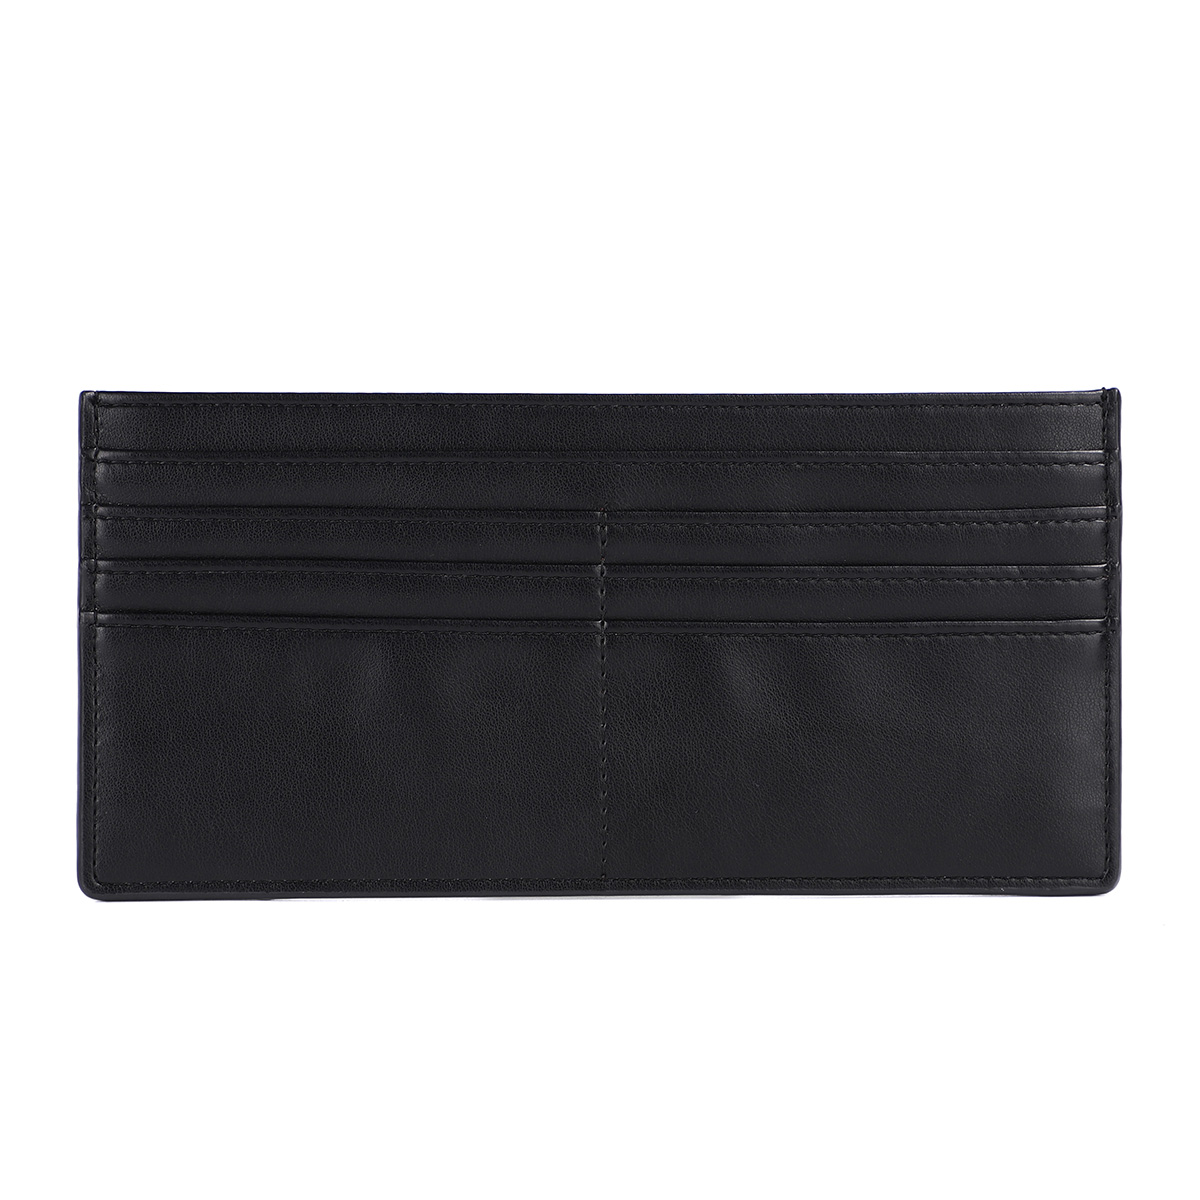 LIZDAYS 長財布 レディース 財布 フェイクレザー 薄い 軽い スリム 財布 スキミング防止